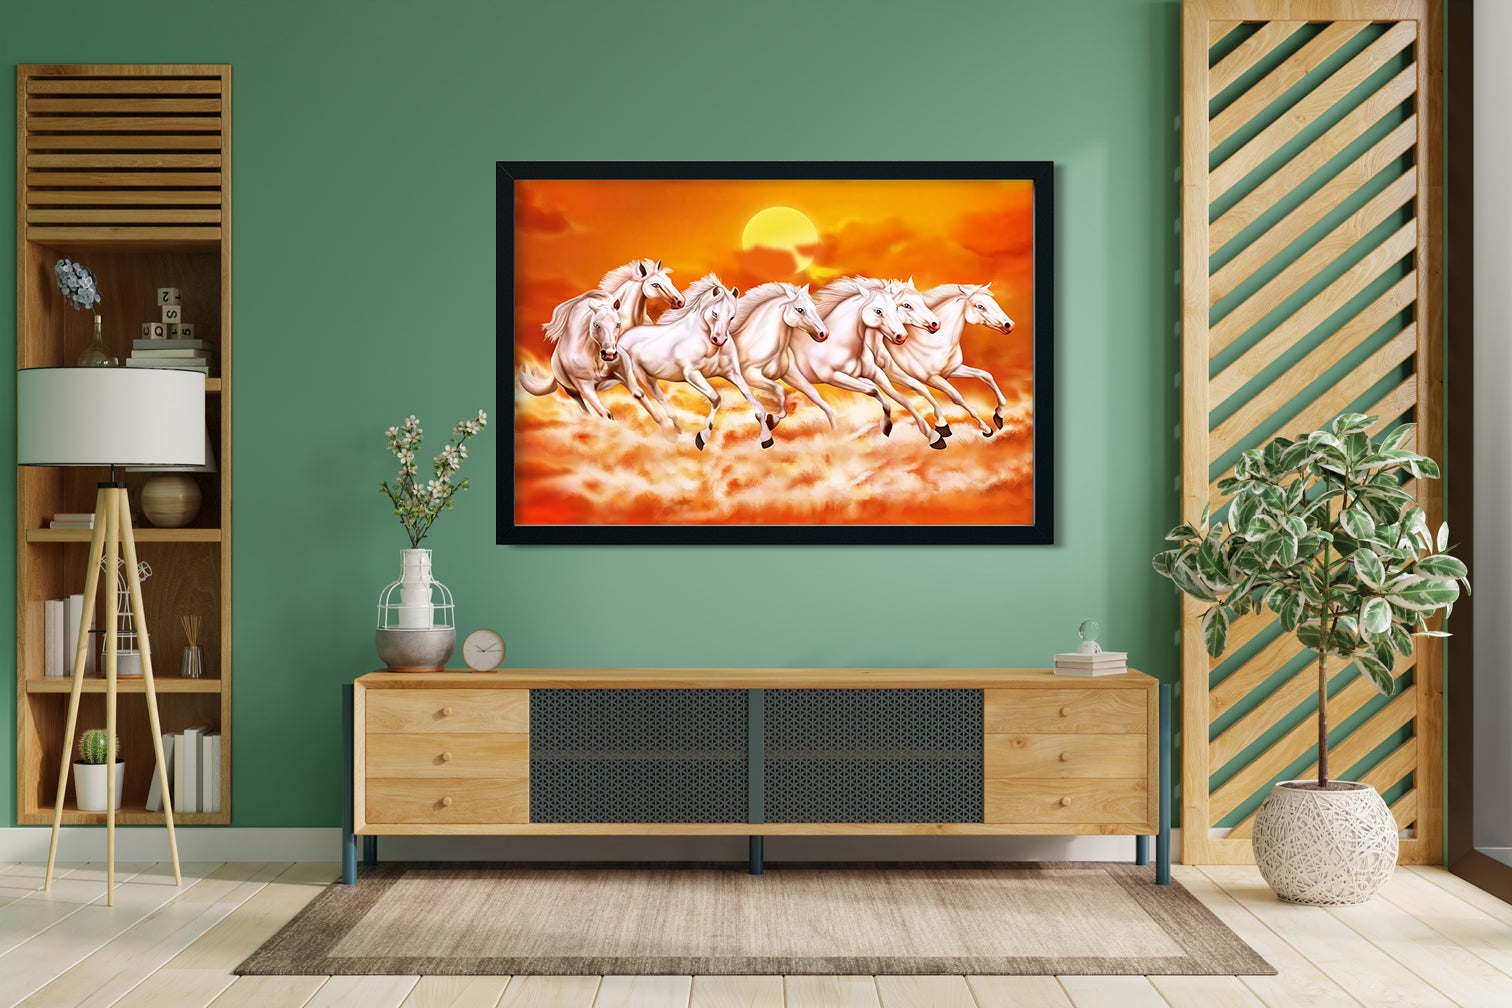 Vastushashtra Serven Horses Painting - Meri Deewar - MeriDeewar